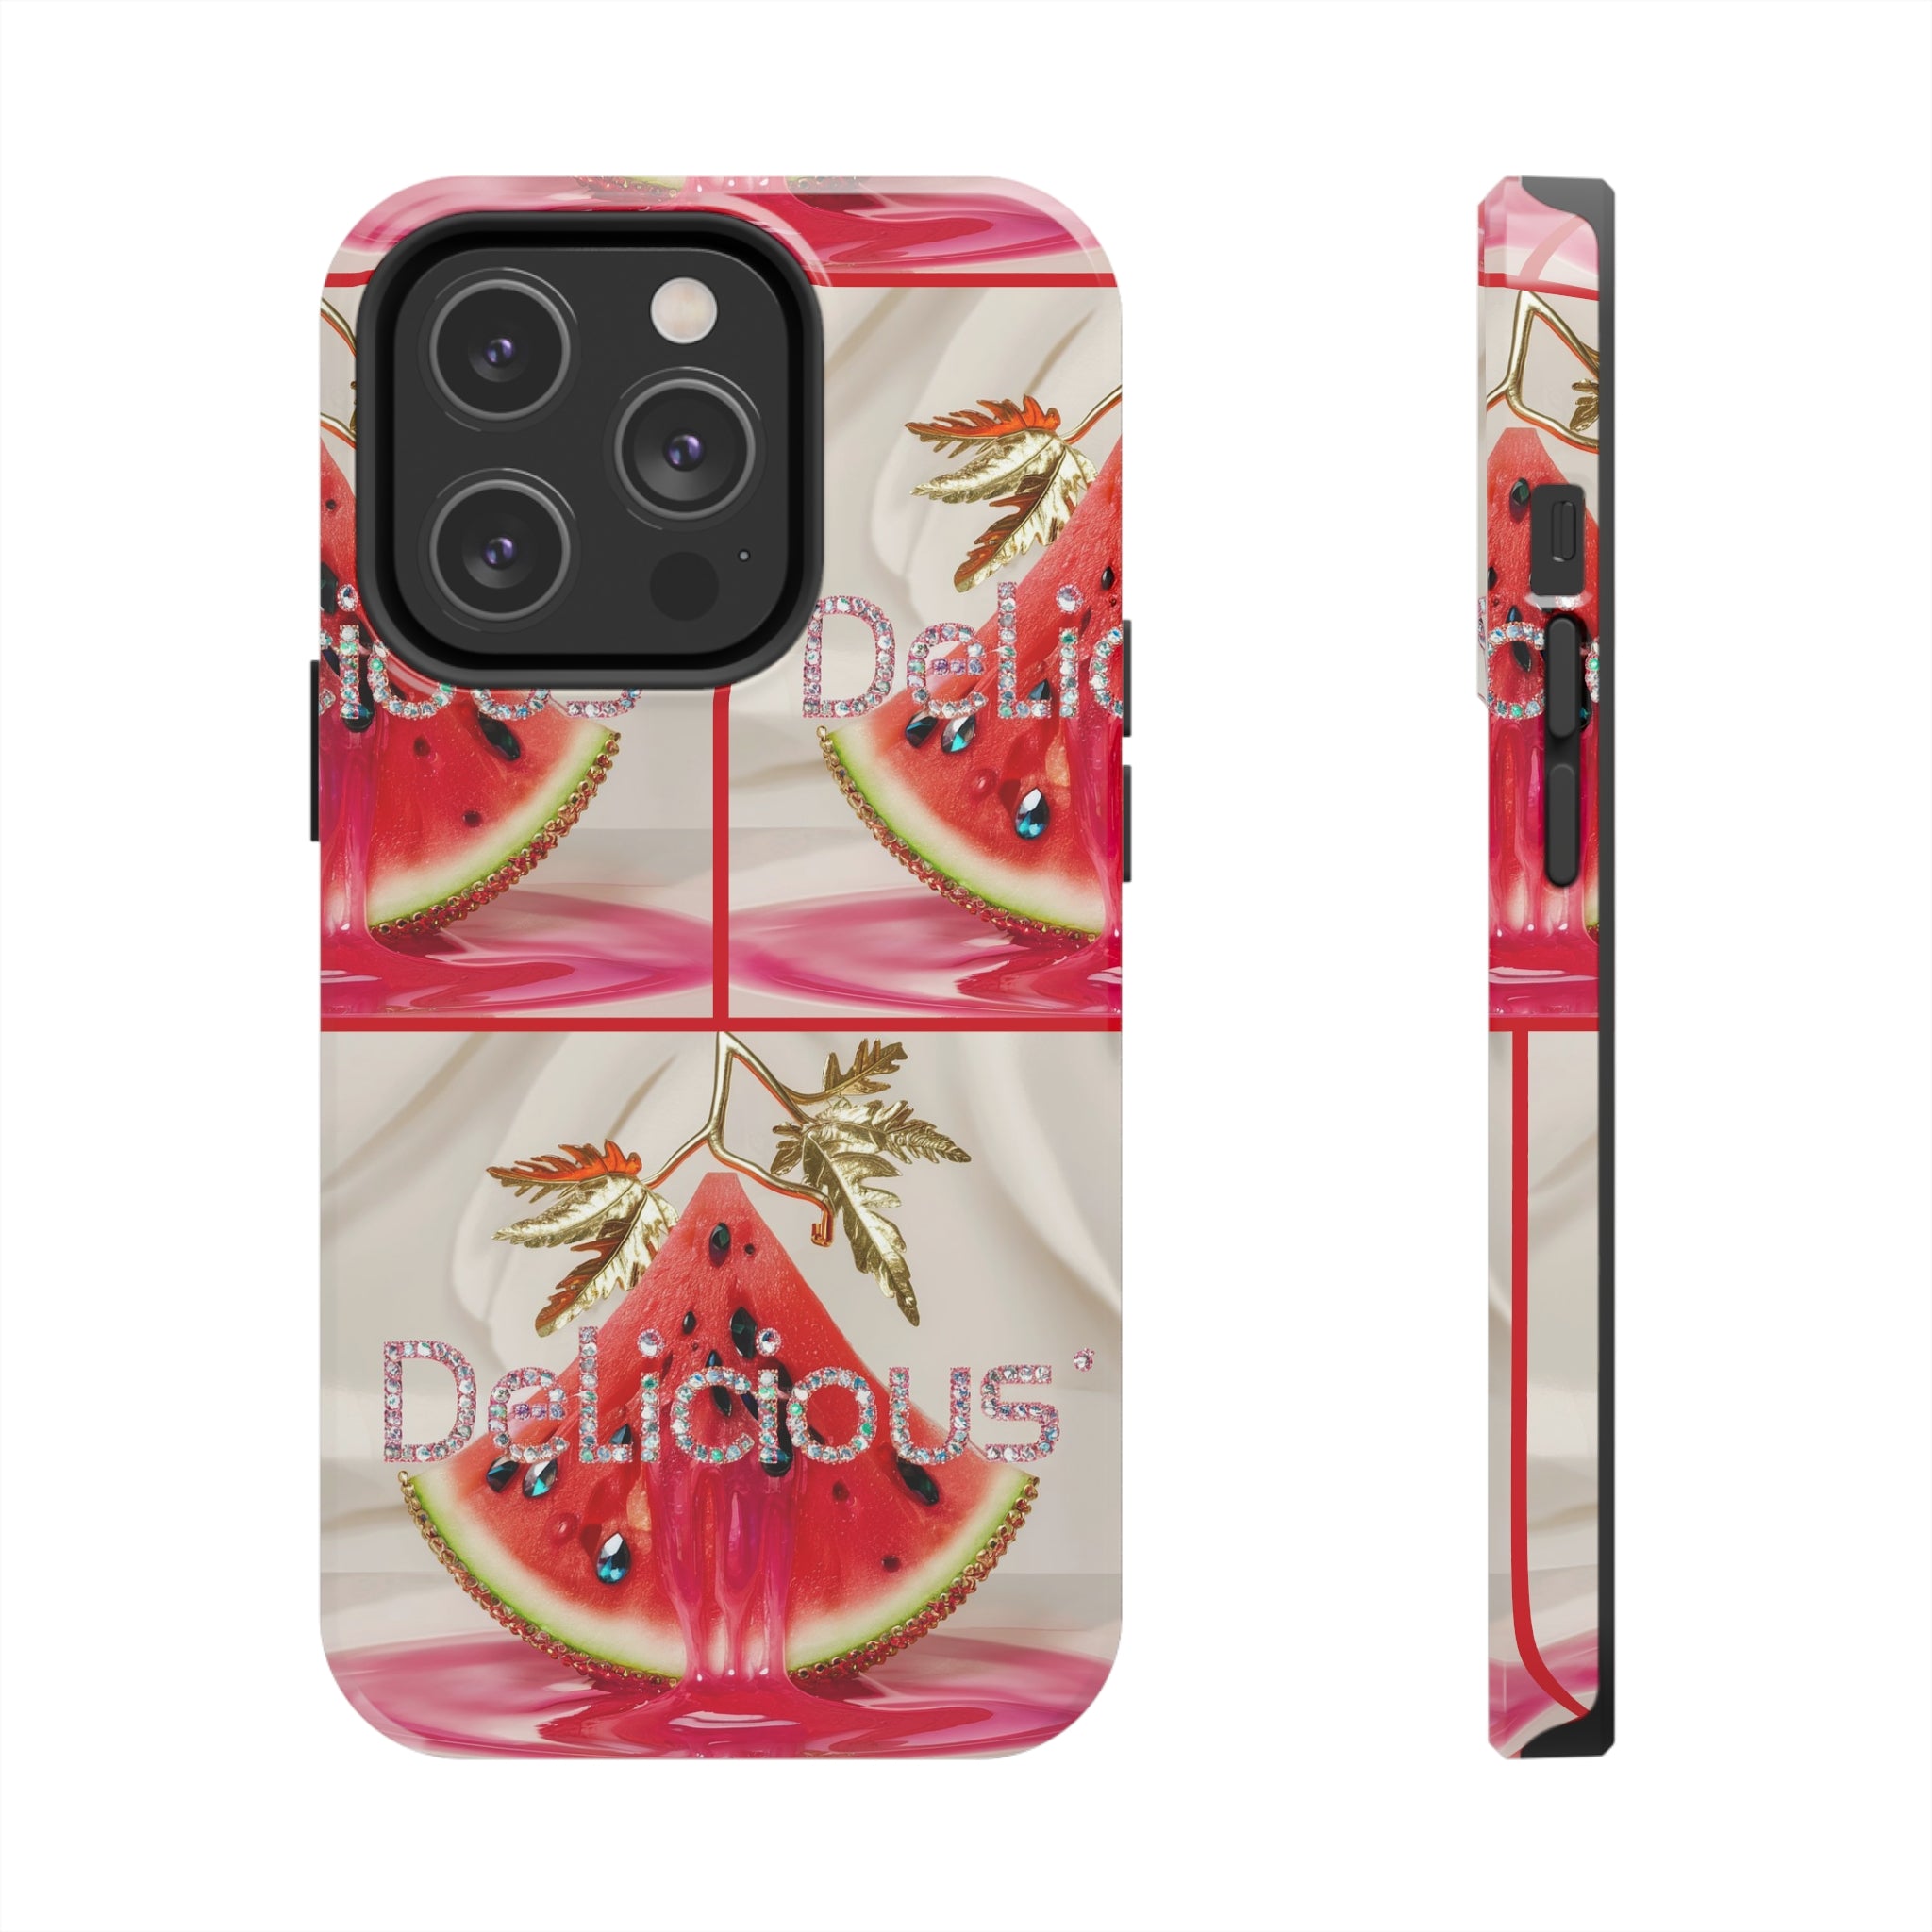 Delicious Watermelon - Tough Phone Cases